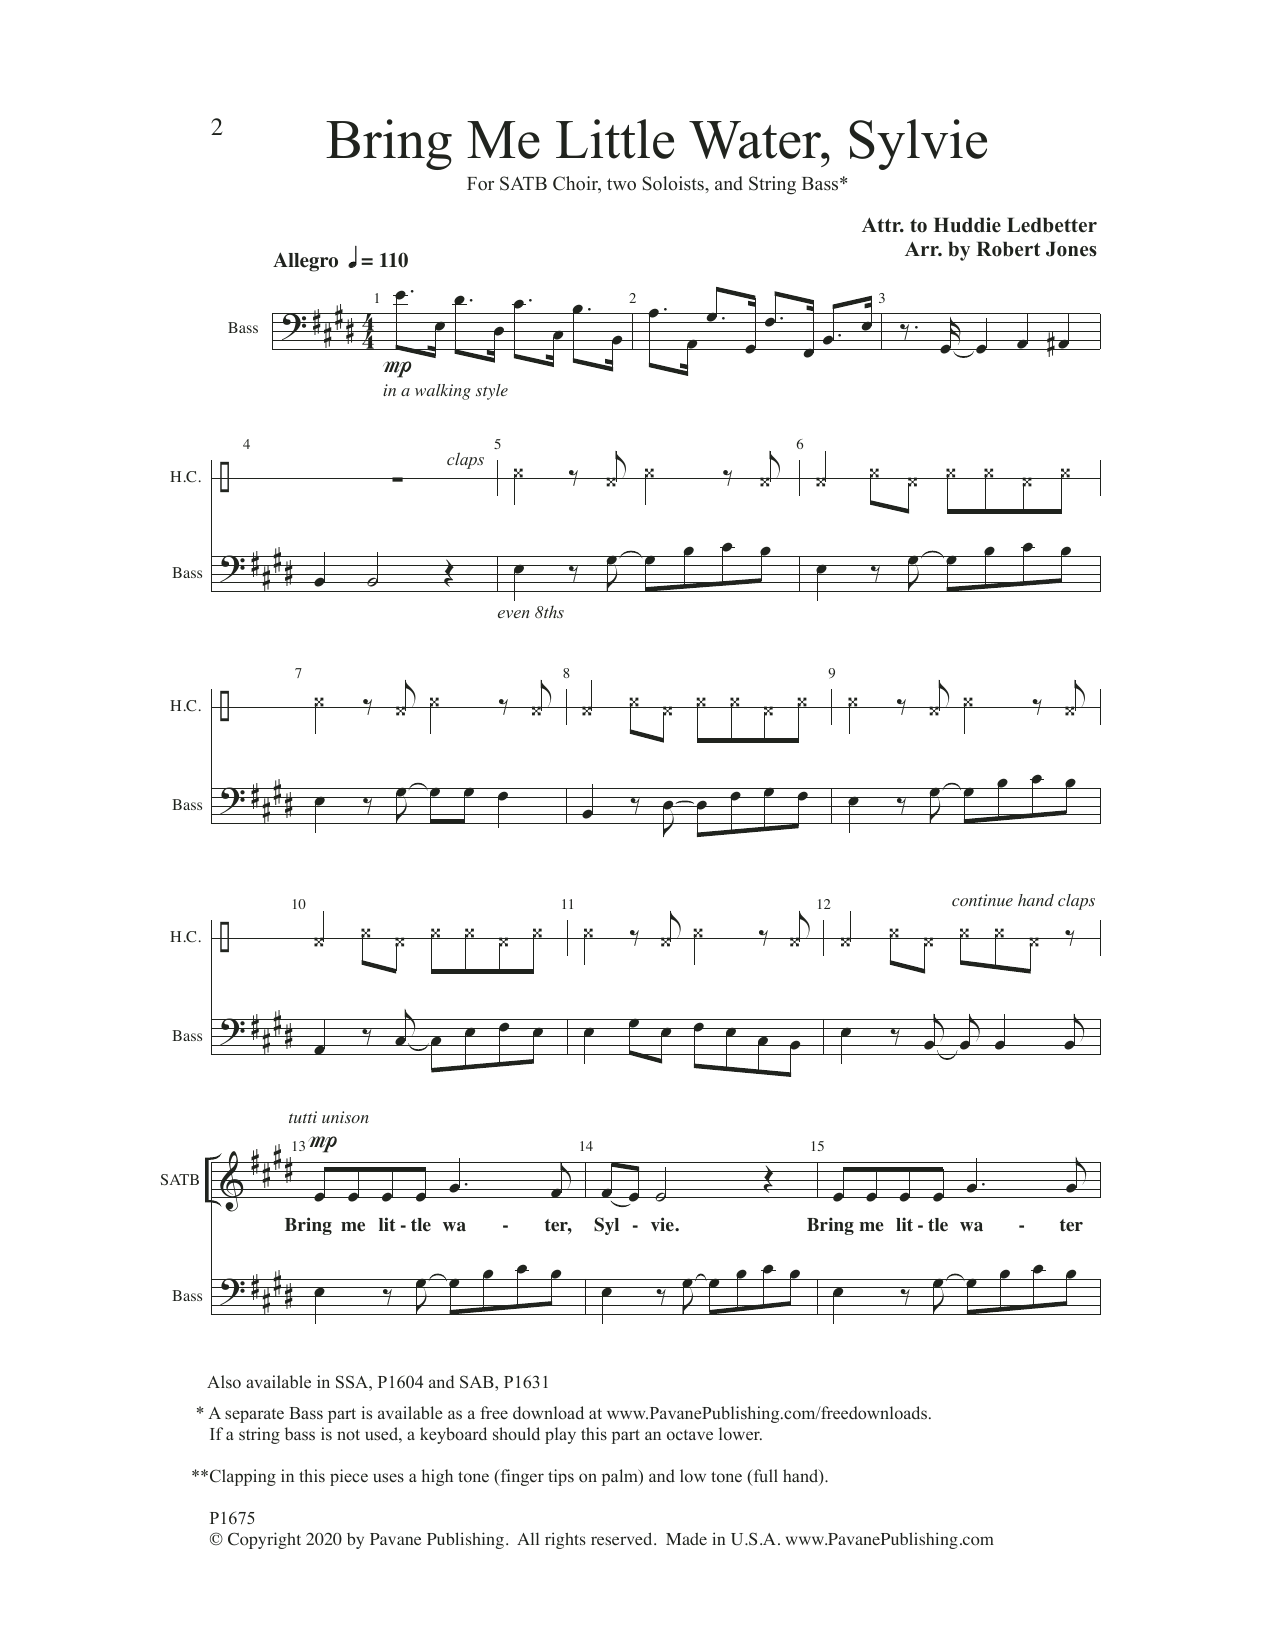 Robert Jones Bring Me Little Water, Silvie Sheet Music Notes & Chords for TTB Choir - Download or Print PDF